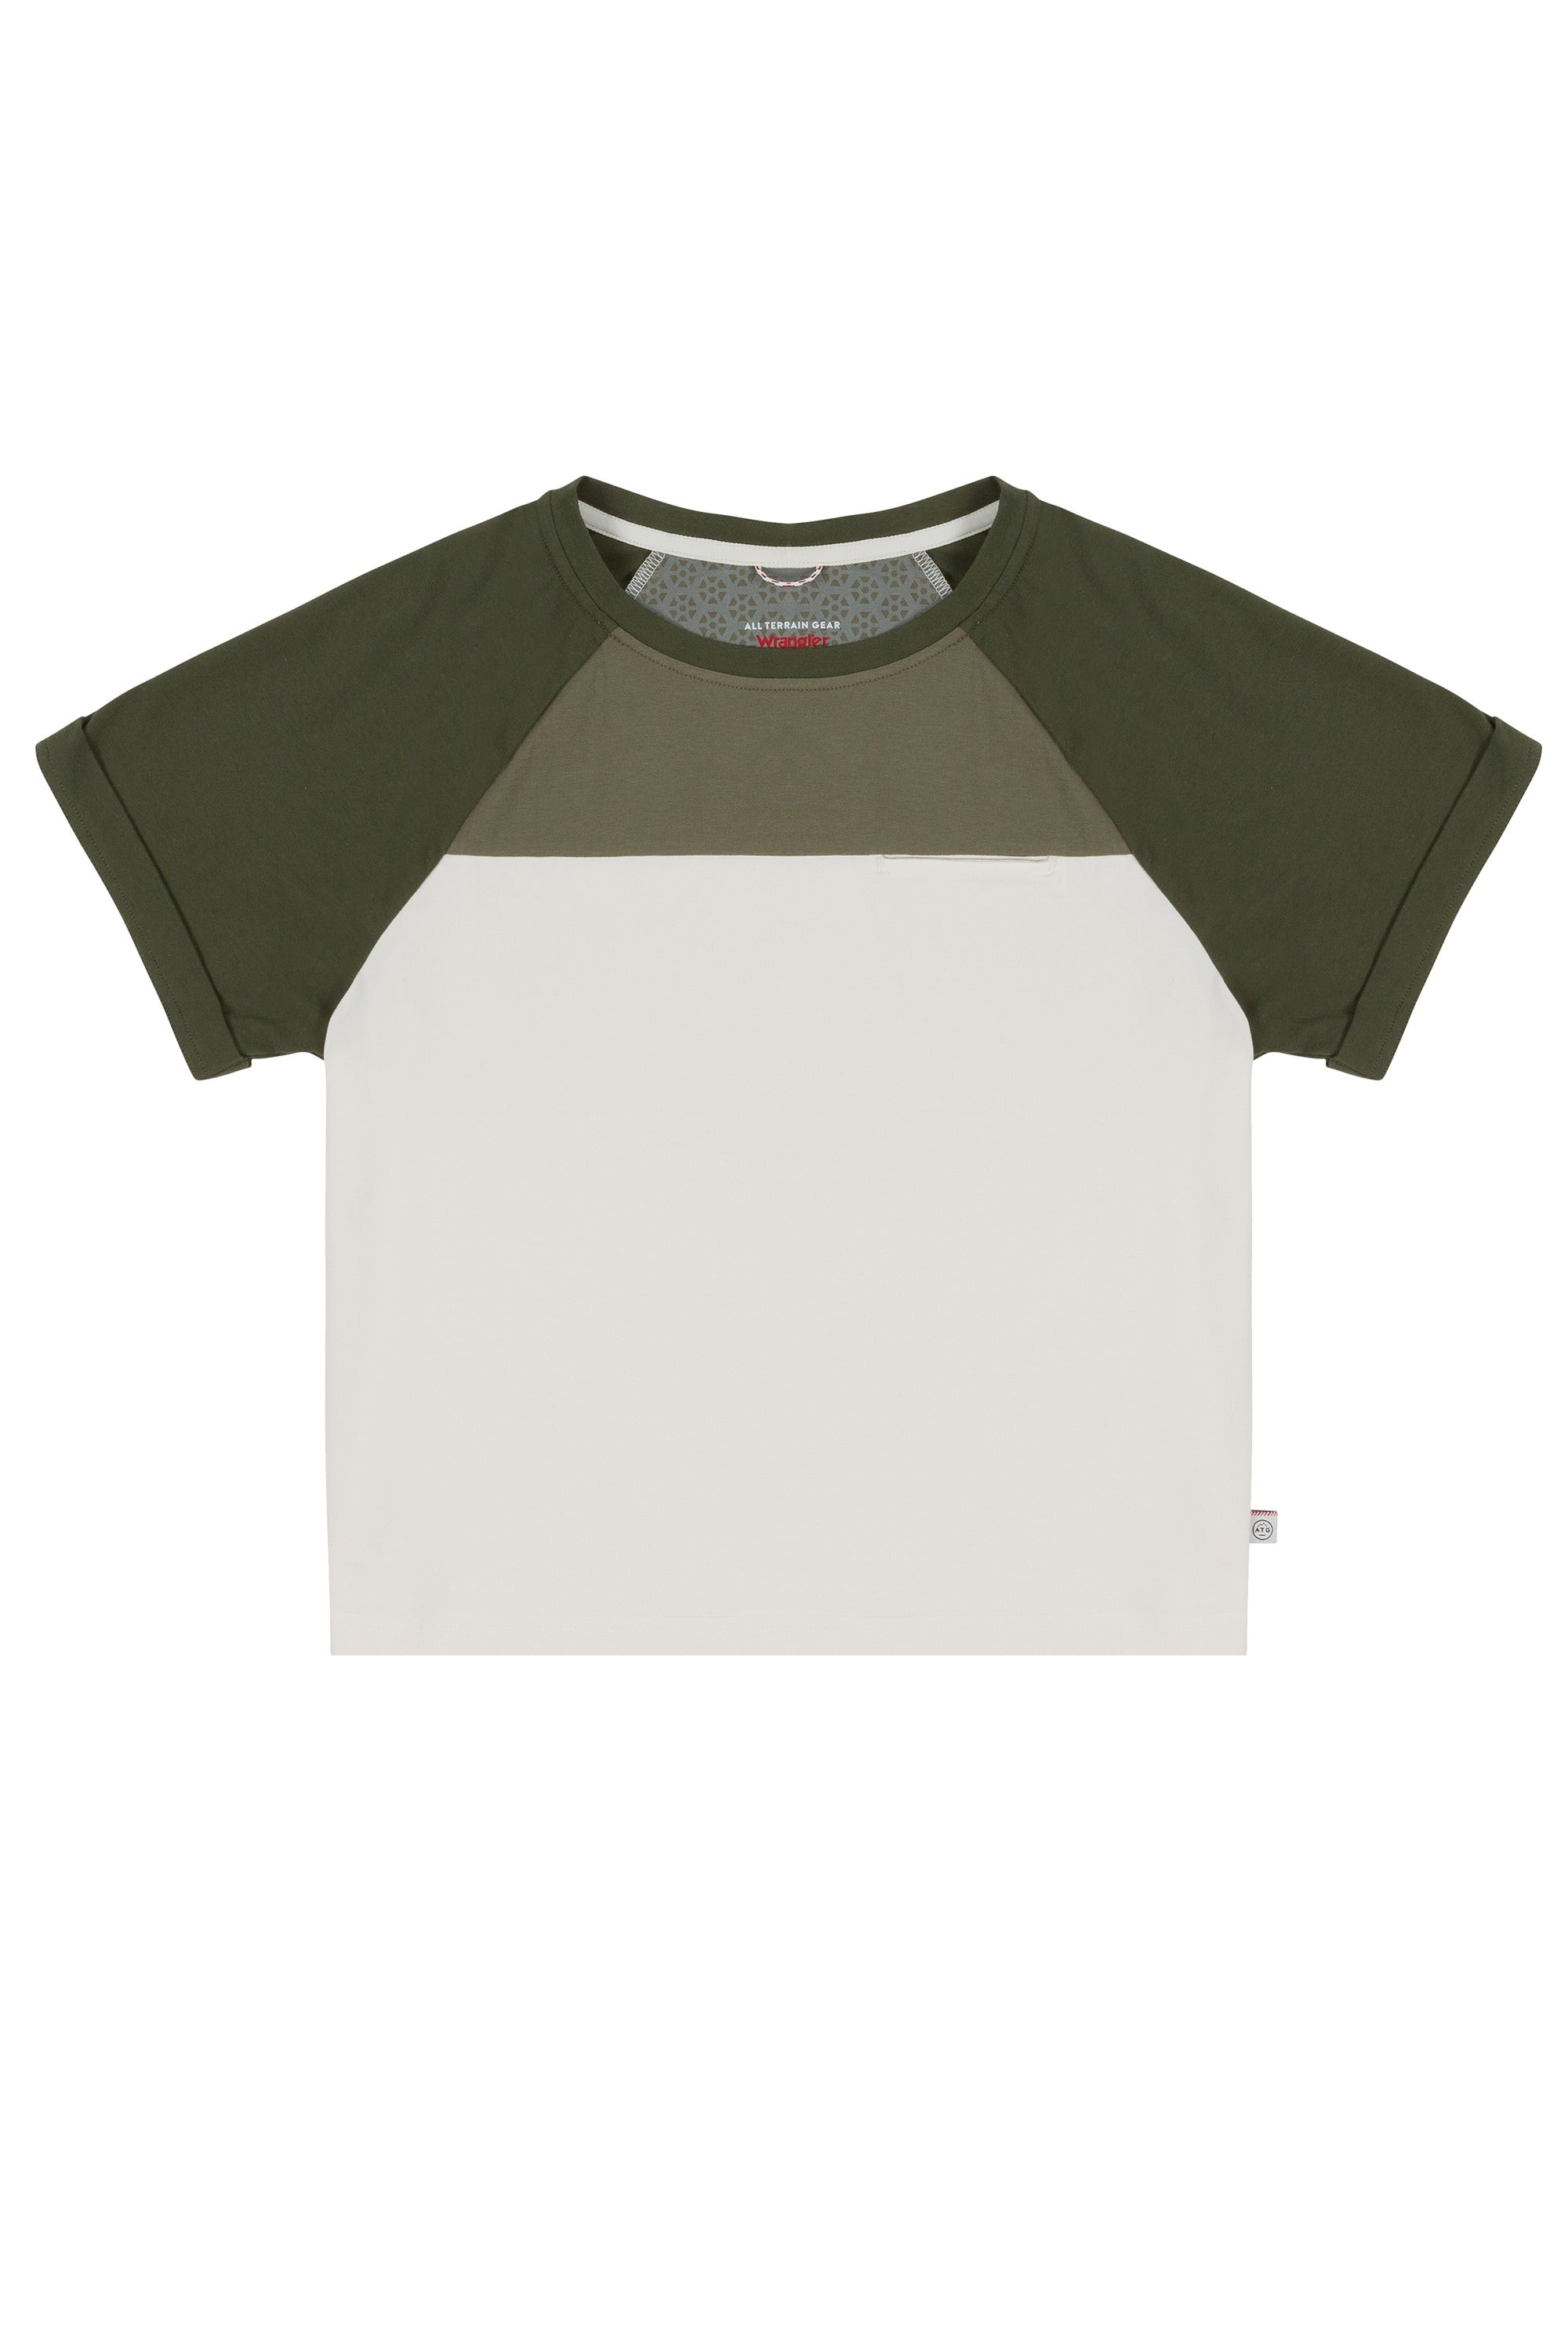 Kurzarm Hybrid Tee in Dusty Olive T-Shirts Wrangler   